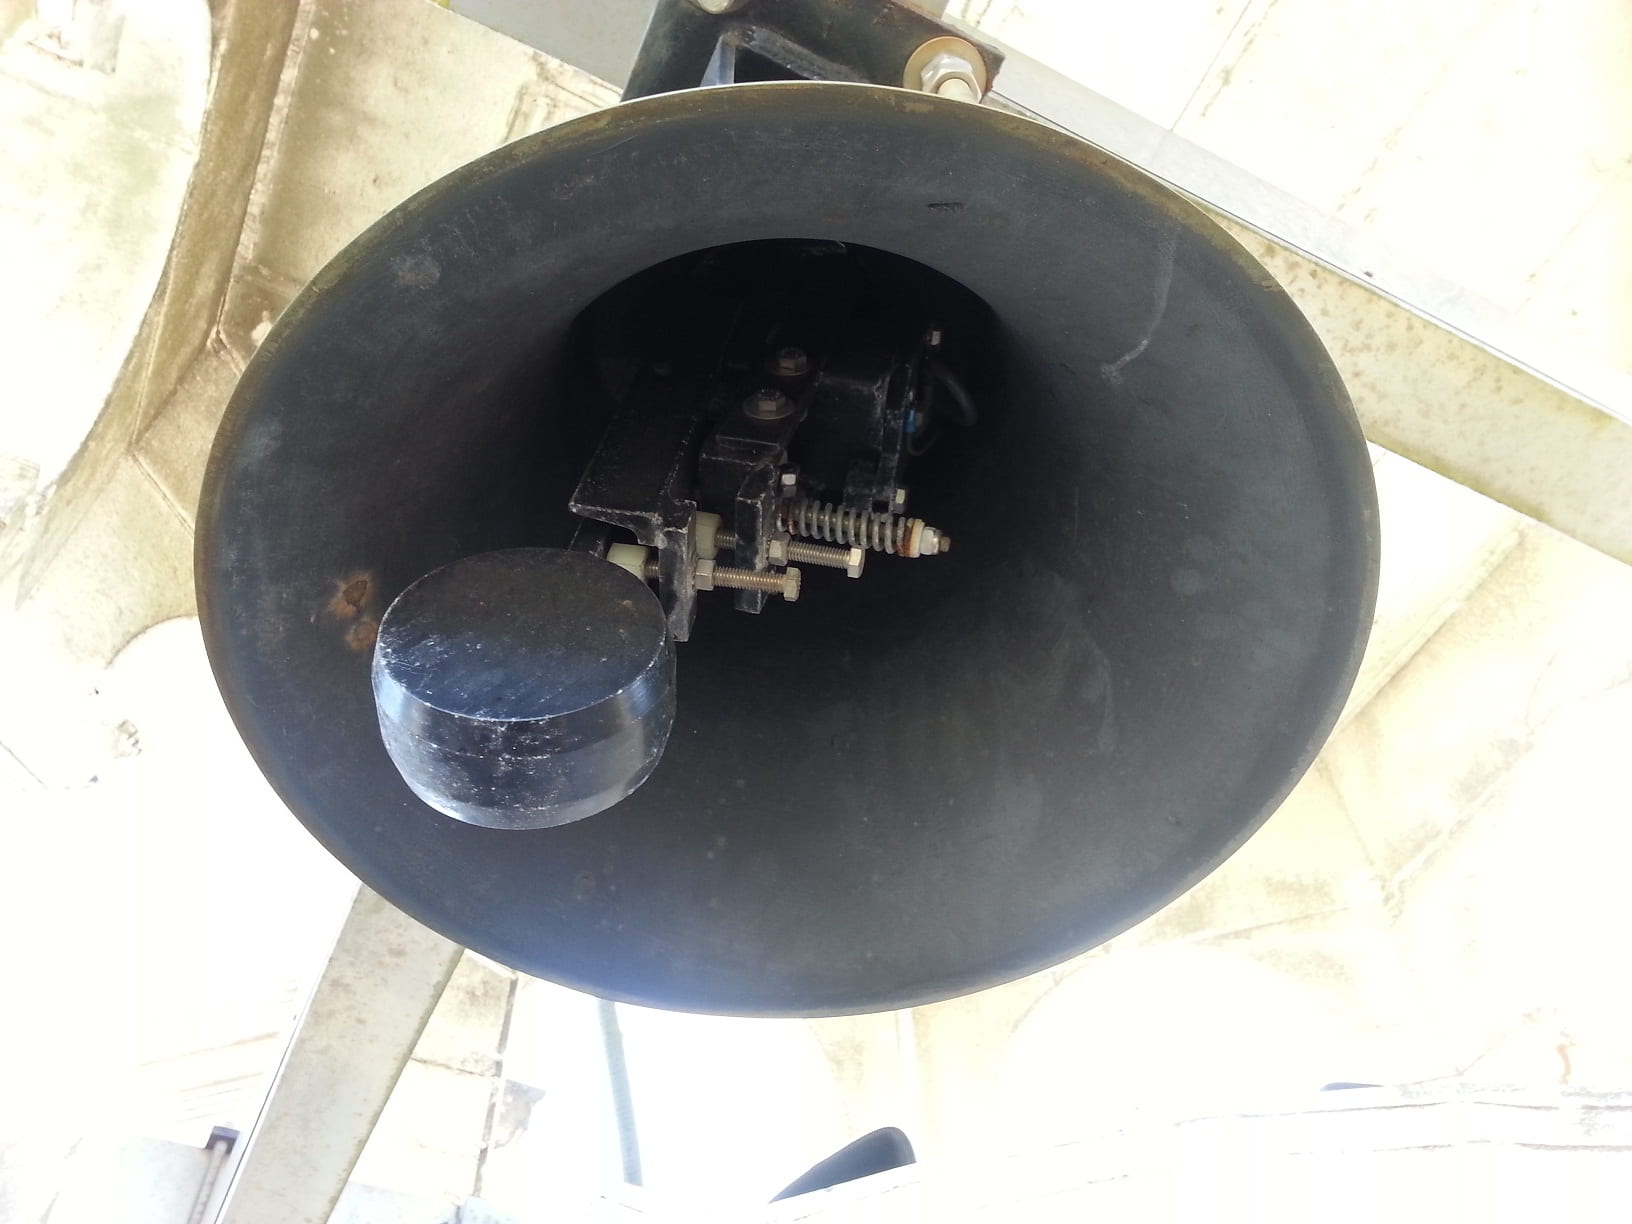 bell from below